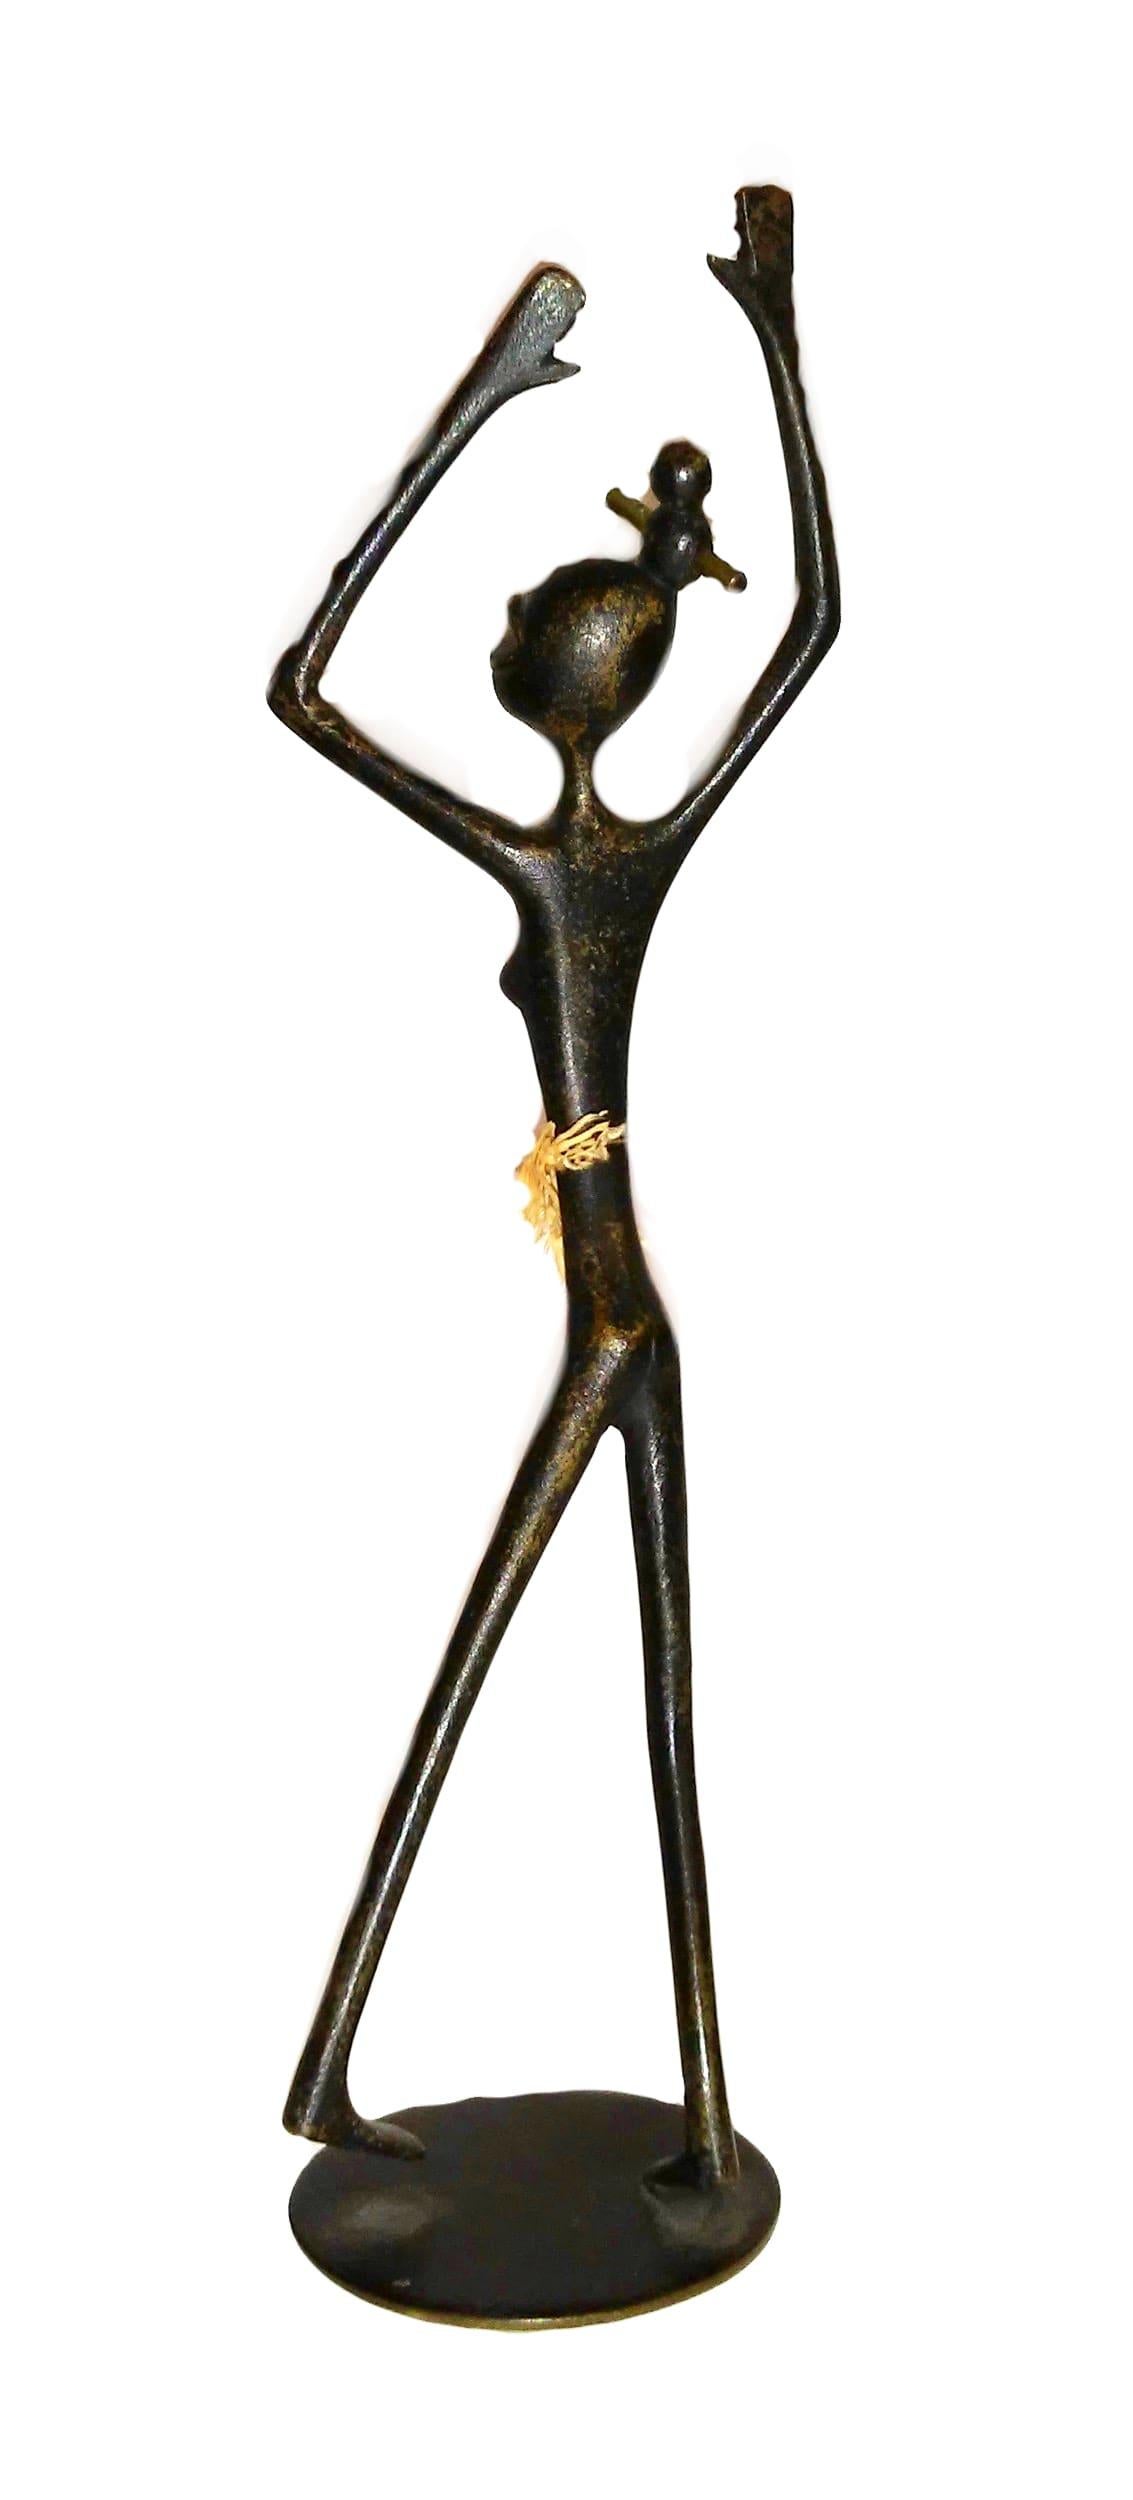 African Dancer
Sculpture designed by Karl Hagenauer
Black patinated brass
Manufactured by Werkstätte Hagenauer Wien
Circa 1935 - 1945
Marked on the underside 'Hagenauer Wien, Made in Austria' It also has the iconic wHw logo
Height 16 cm (6